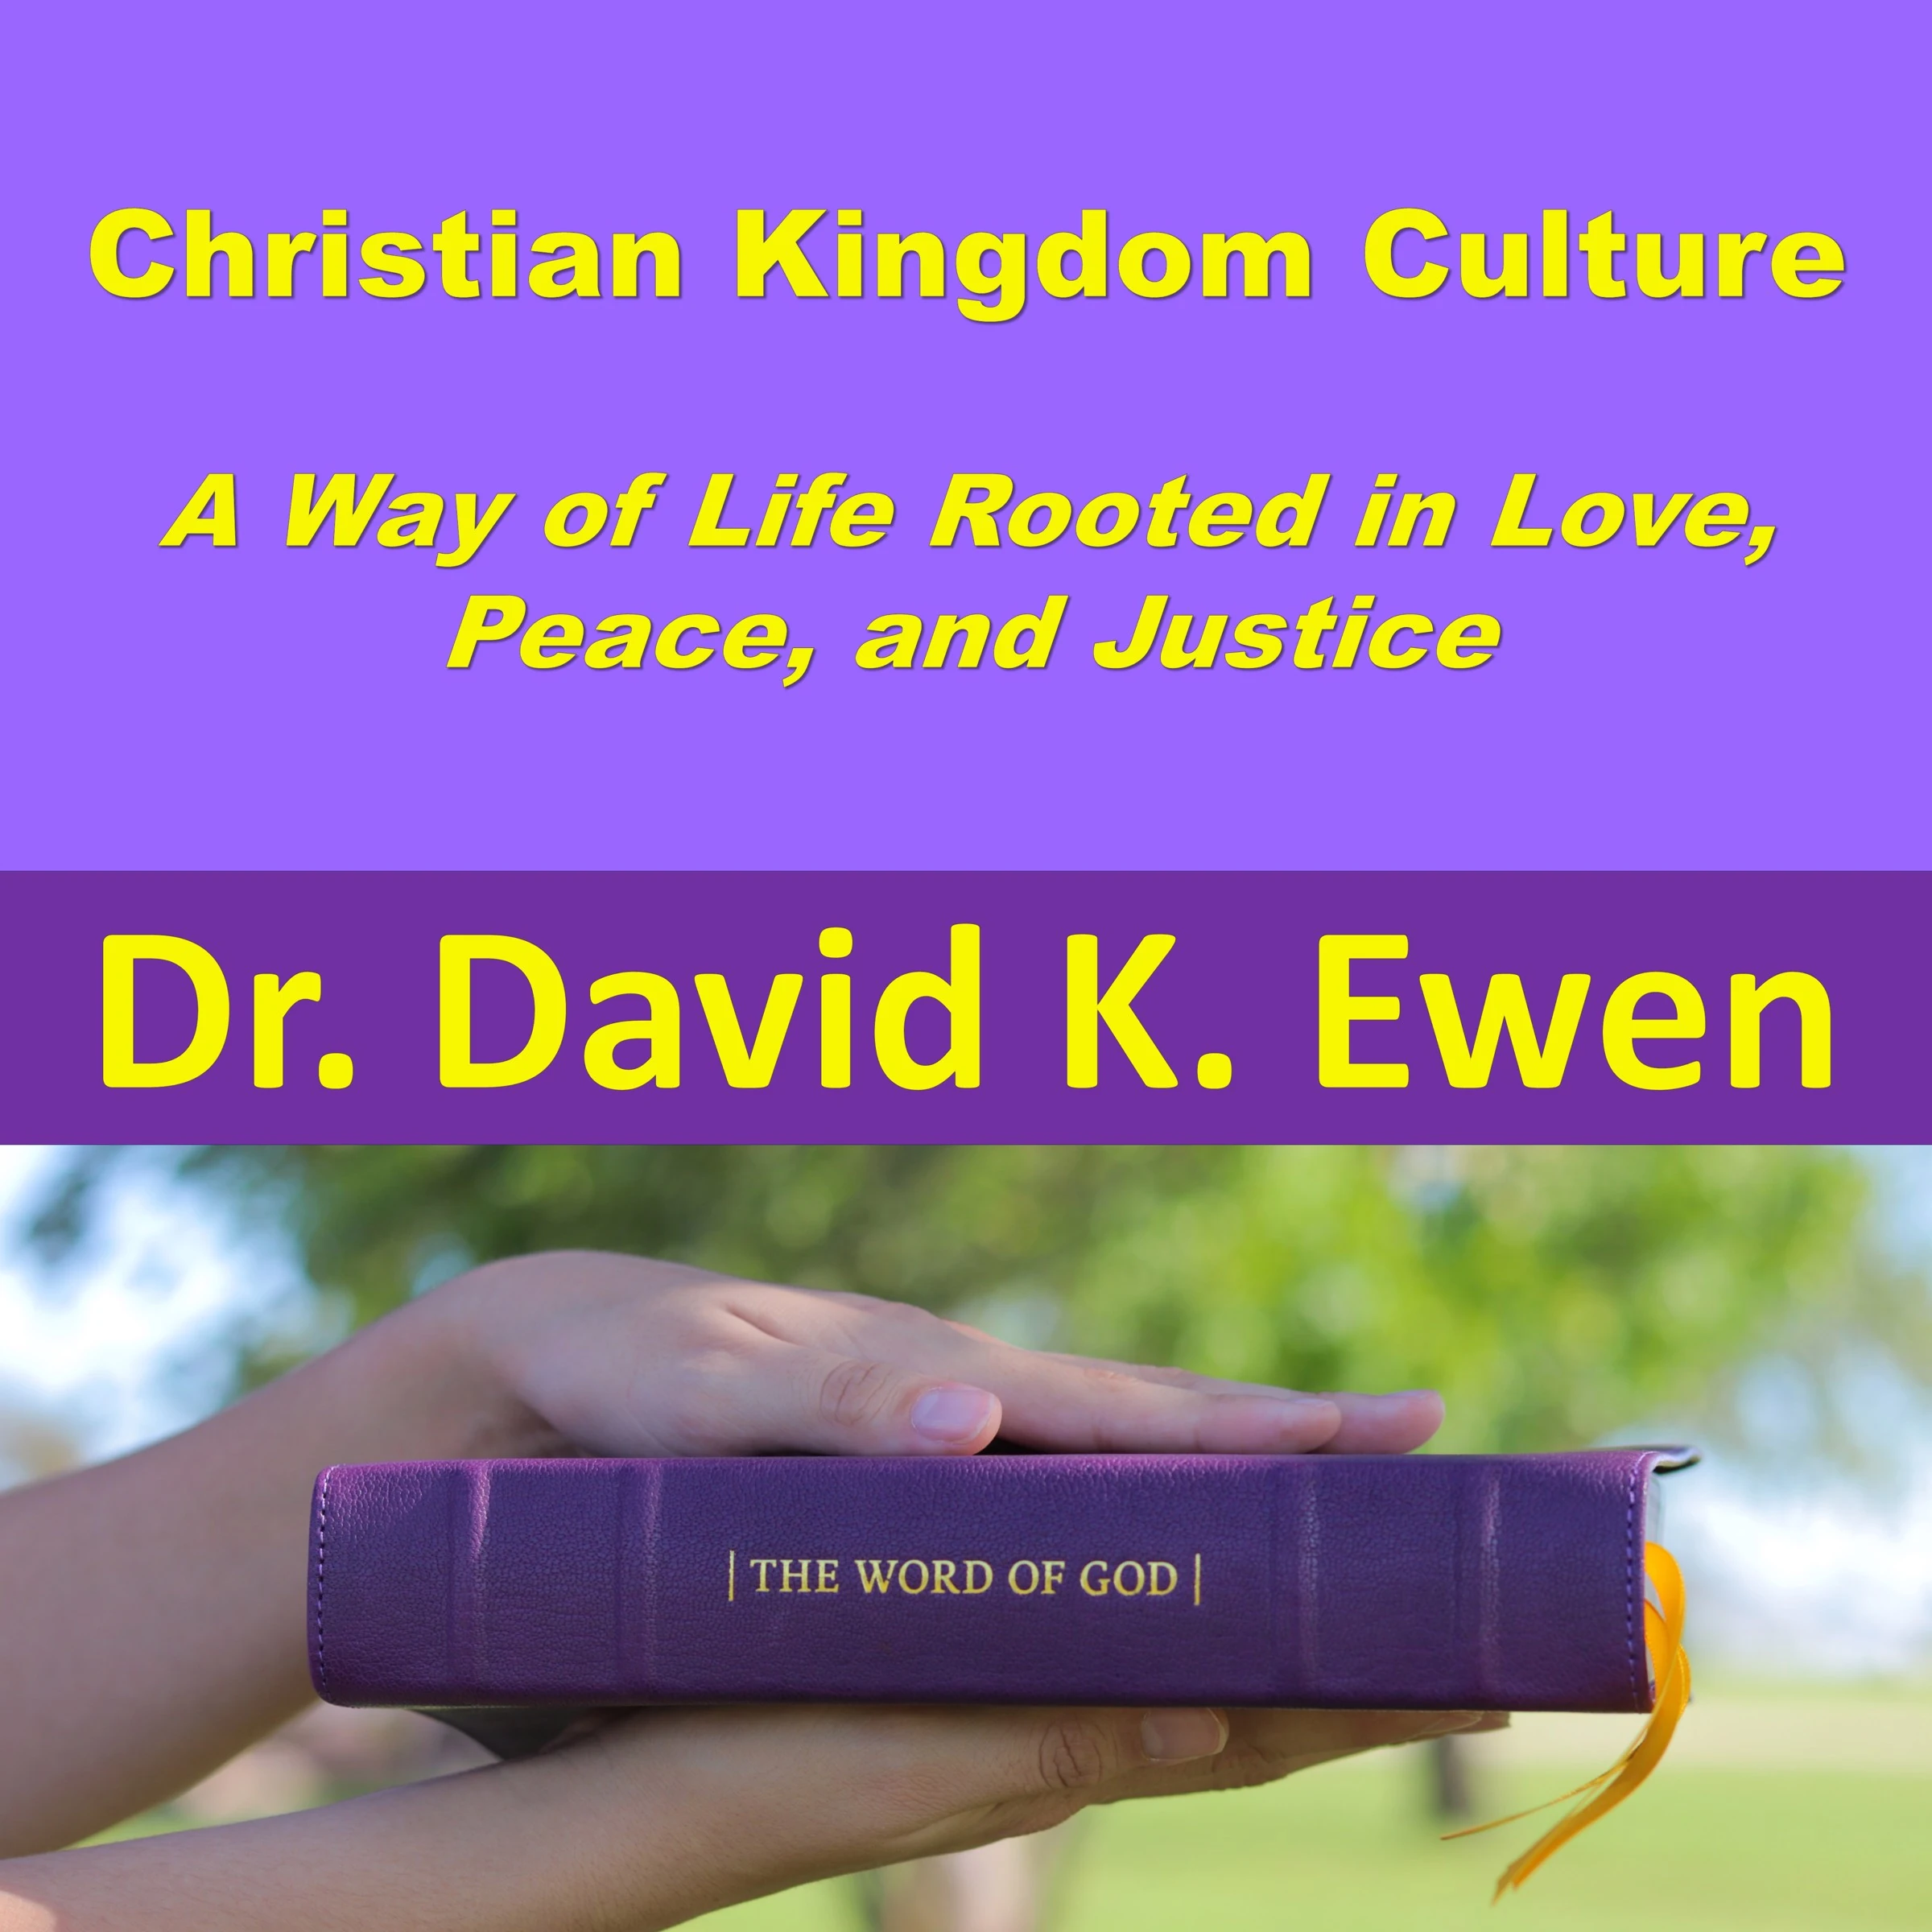 Christian Kingdom Culture by Dr. David K. Ewen Audiobook